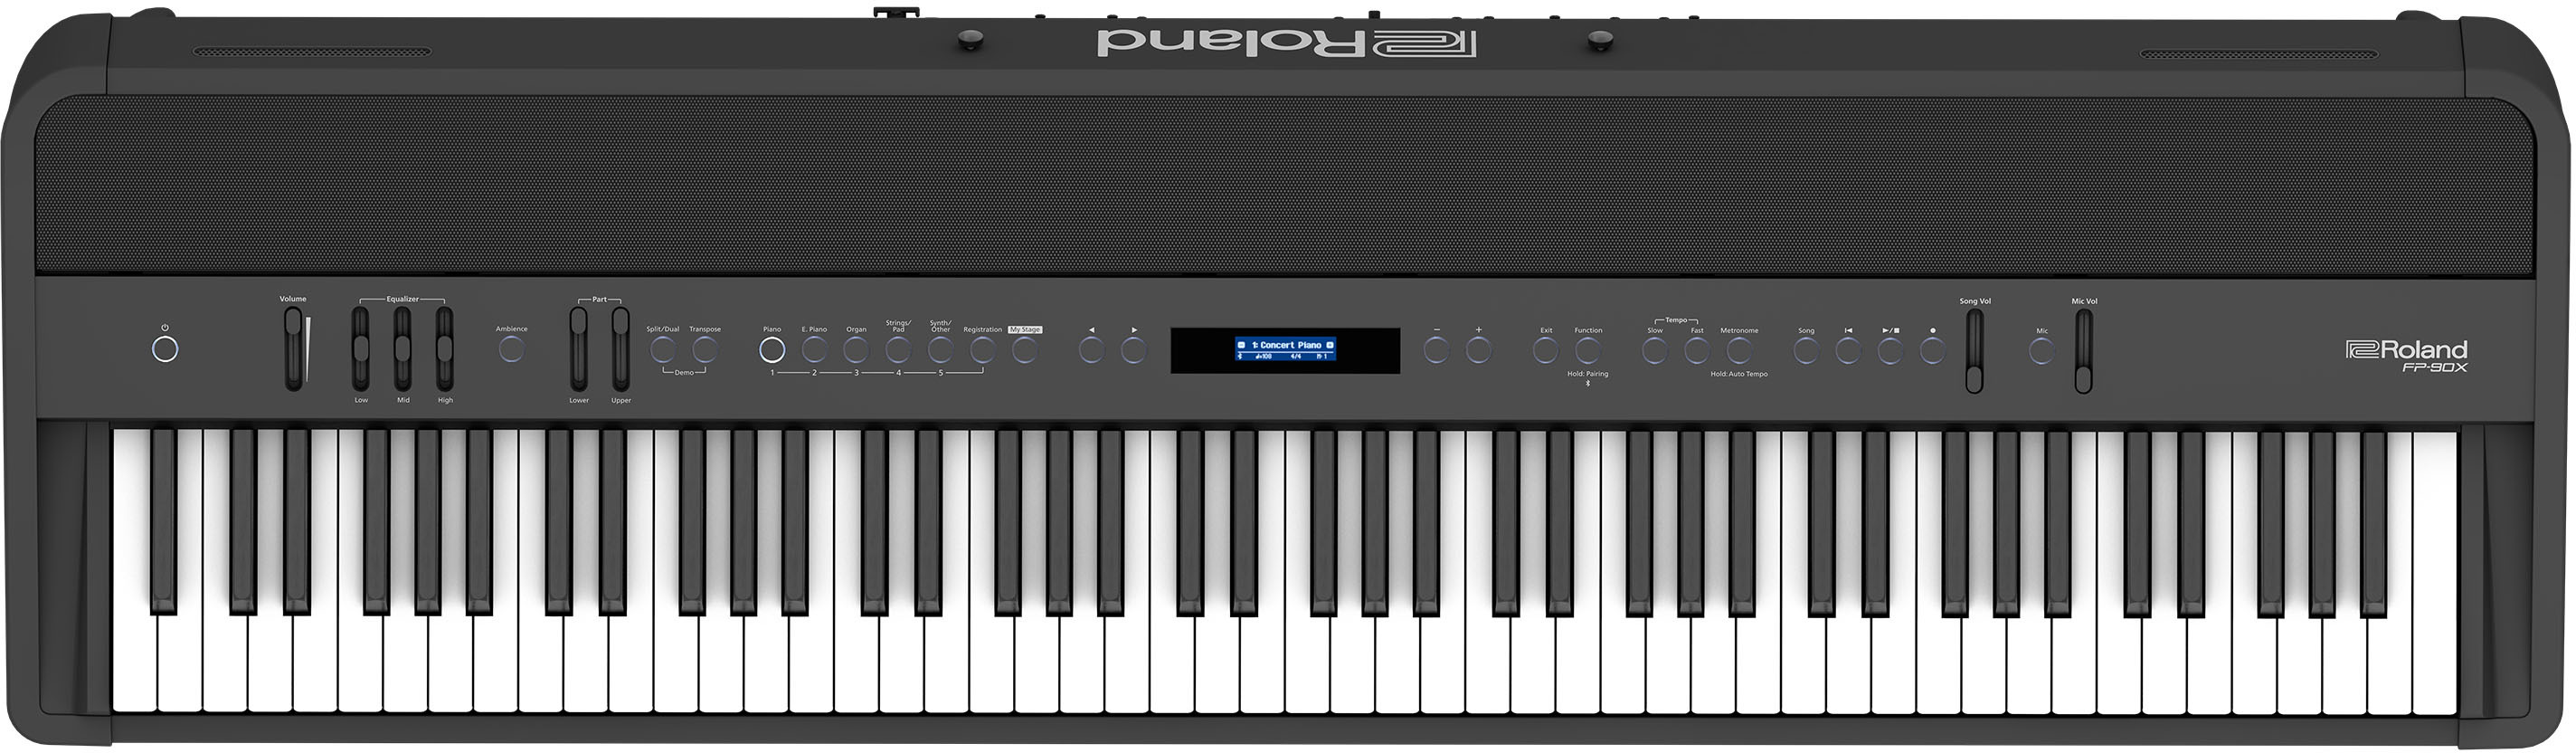 Roland Fp-90x Bk - Portable digital piano - Main picture